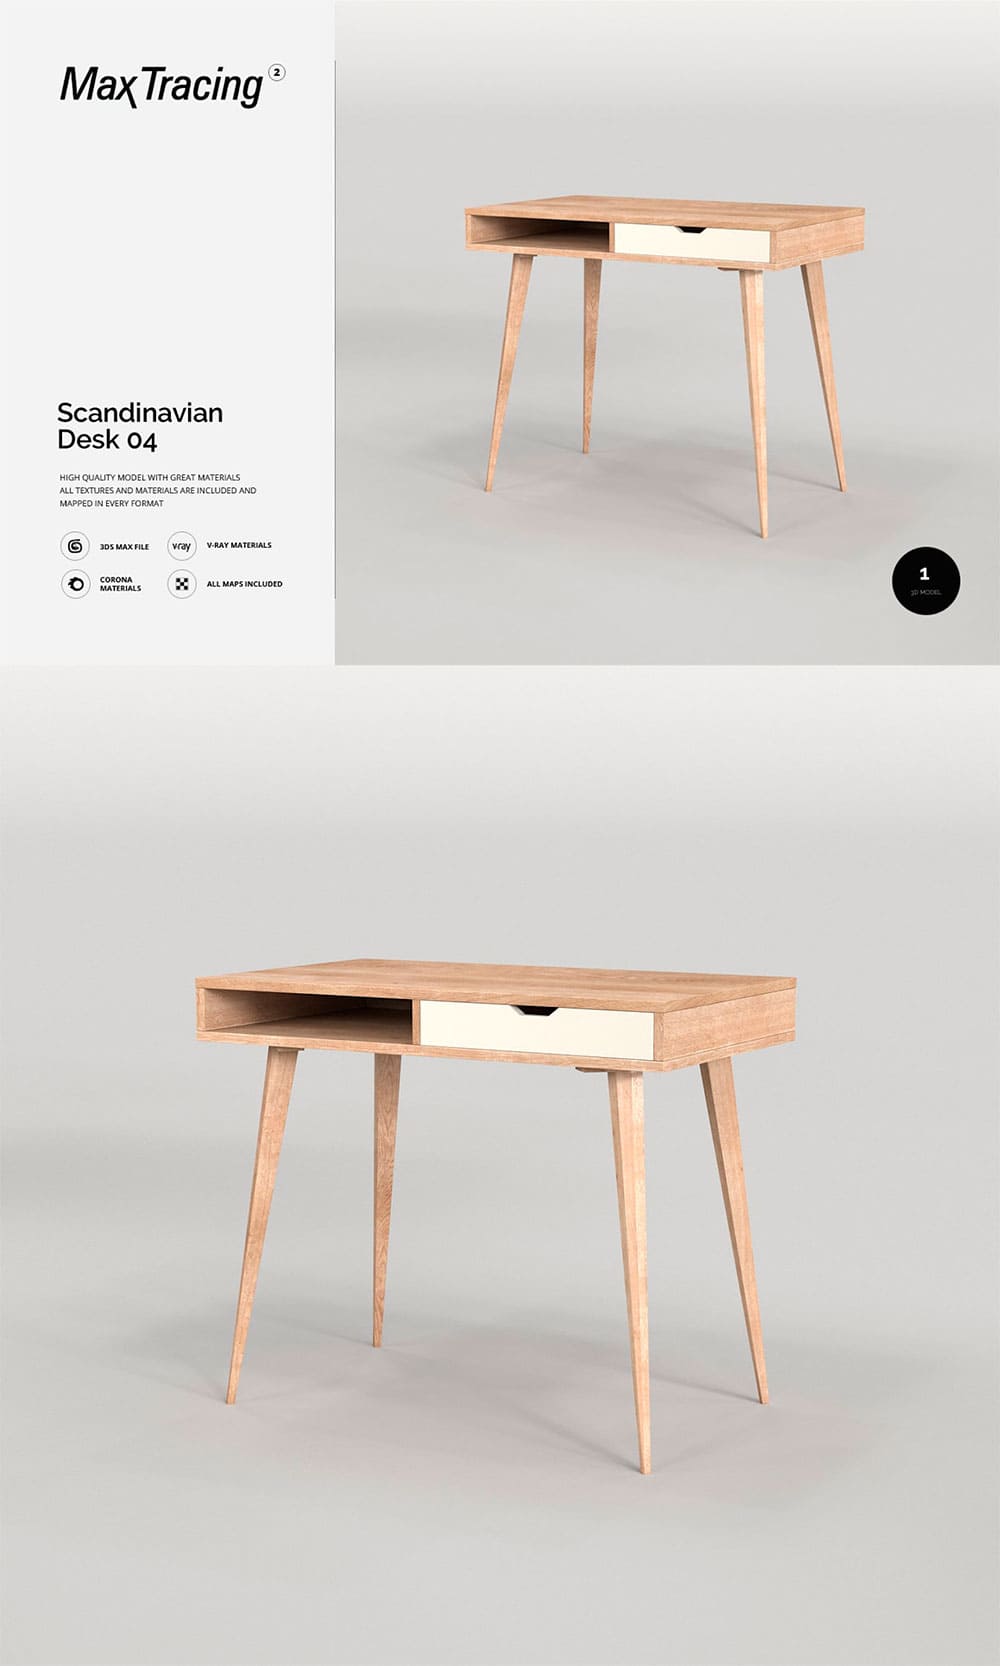 Scandinavian desk 04, picture for pinterest.